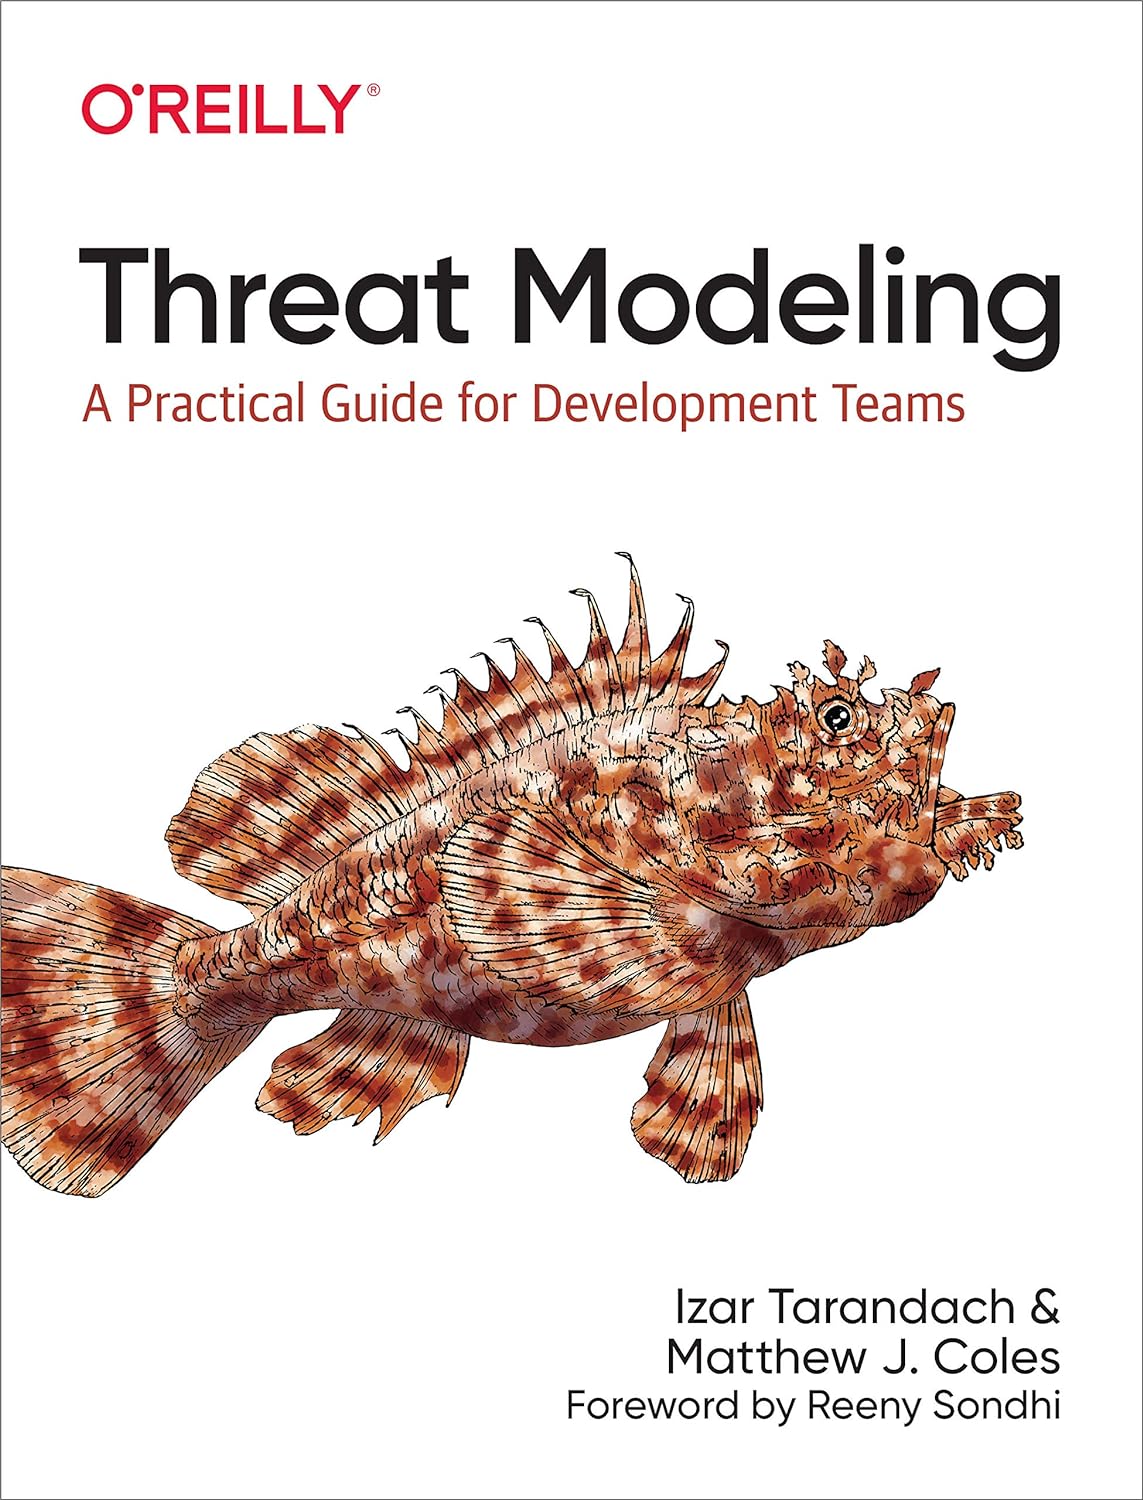 Izar Tarandach, Matthew J. Coles: Threat Modeling (EBook, 2020, O’Reilly Media)